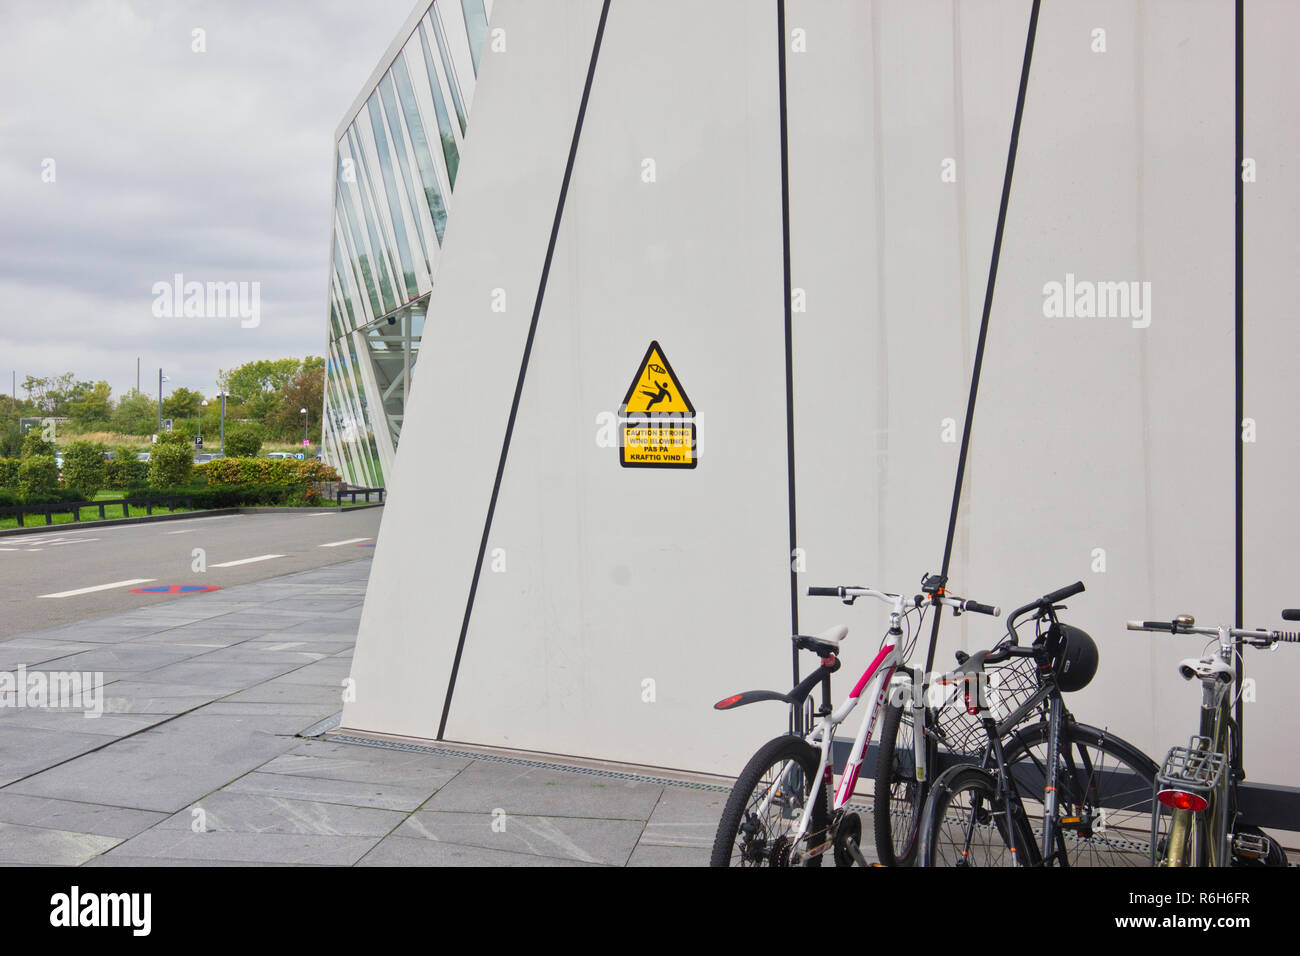 Caution high winds warning sign in Dutch and English, Copenhagen, Denmark, Scandinavia Stock Photo